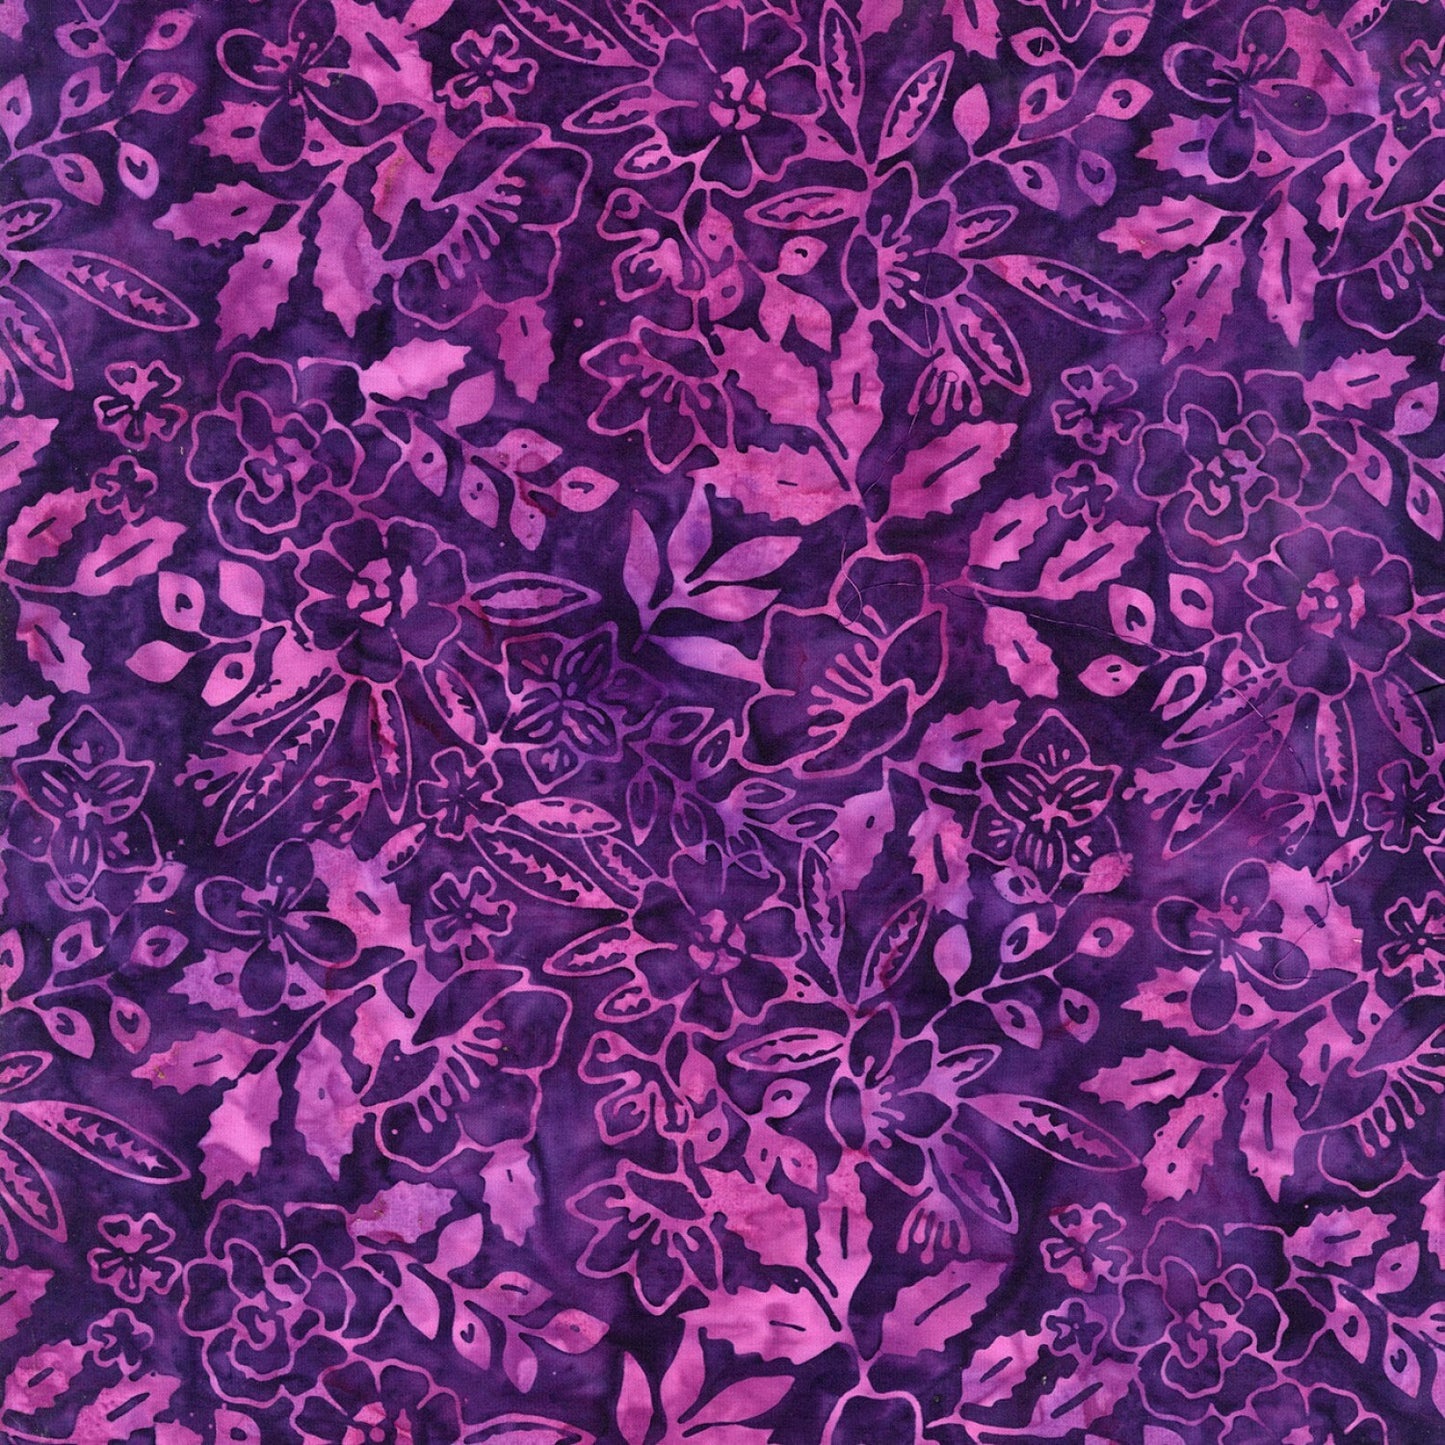 Pansy Batik 5" Squares, Timeless Treasures Treat-Mini42 Pansy, Lavender Purple Beige Batik Charm Pack, 5" Inch Precut Fabric Squares